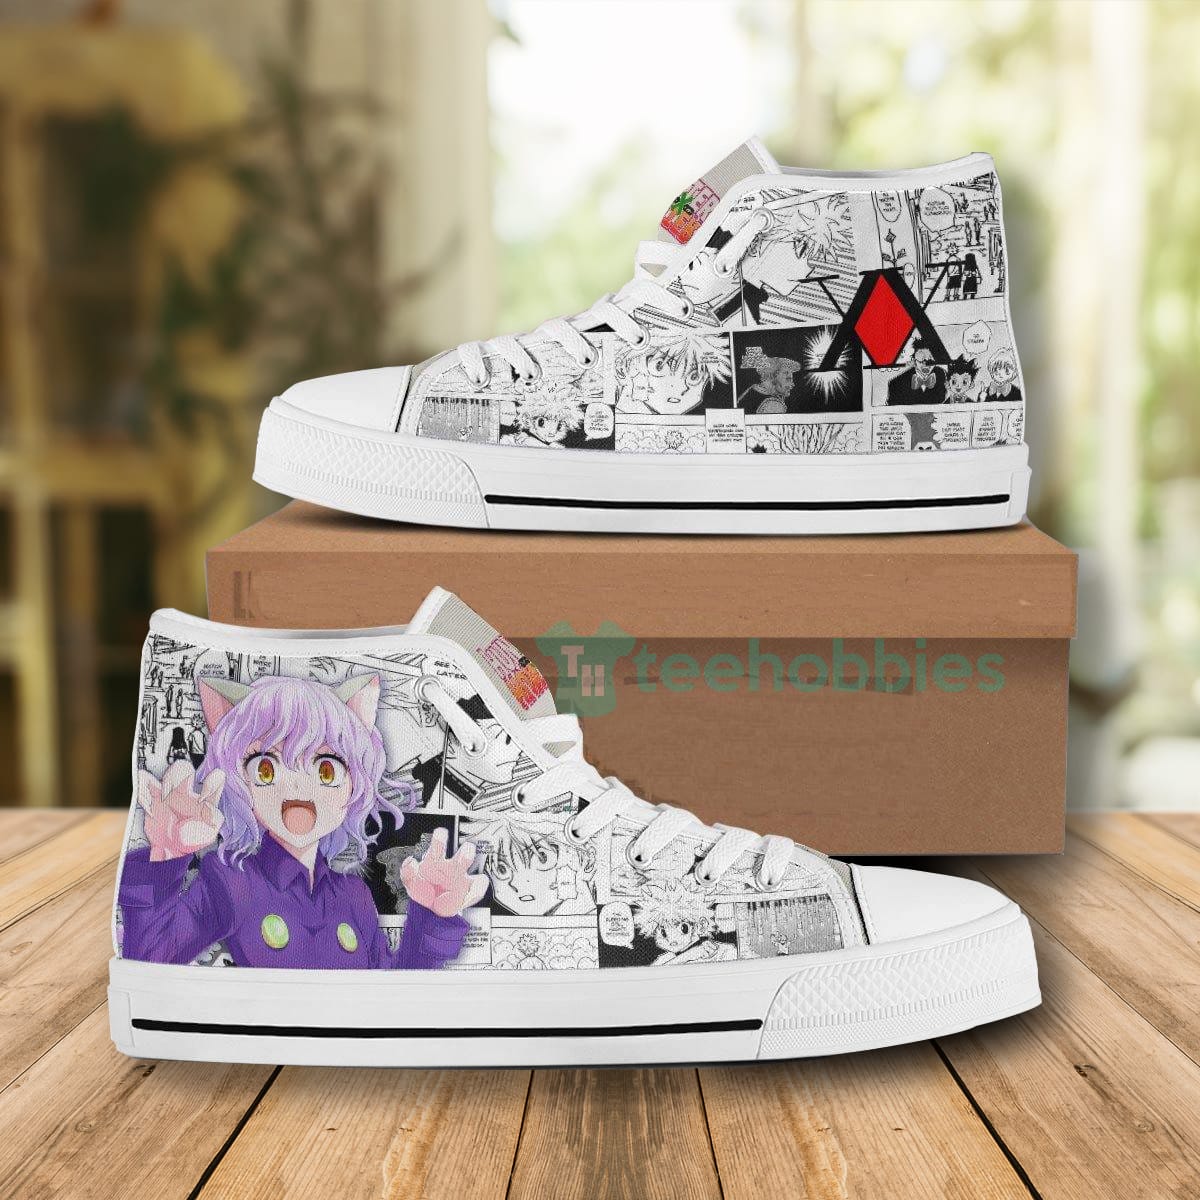 Leorio Paradinight Shoes Custom Hunter x Hunter Anime Slip On Shoes